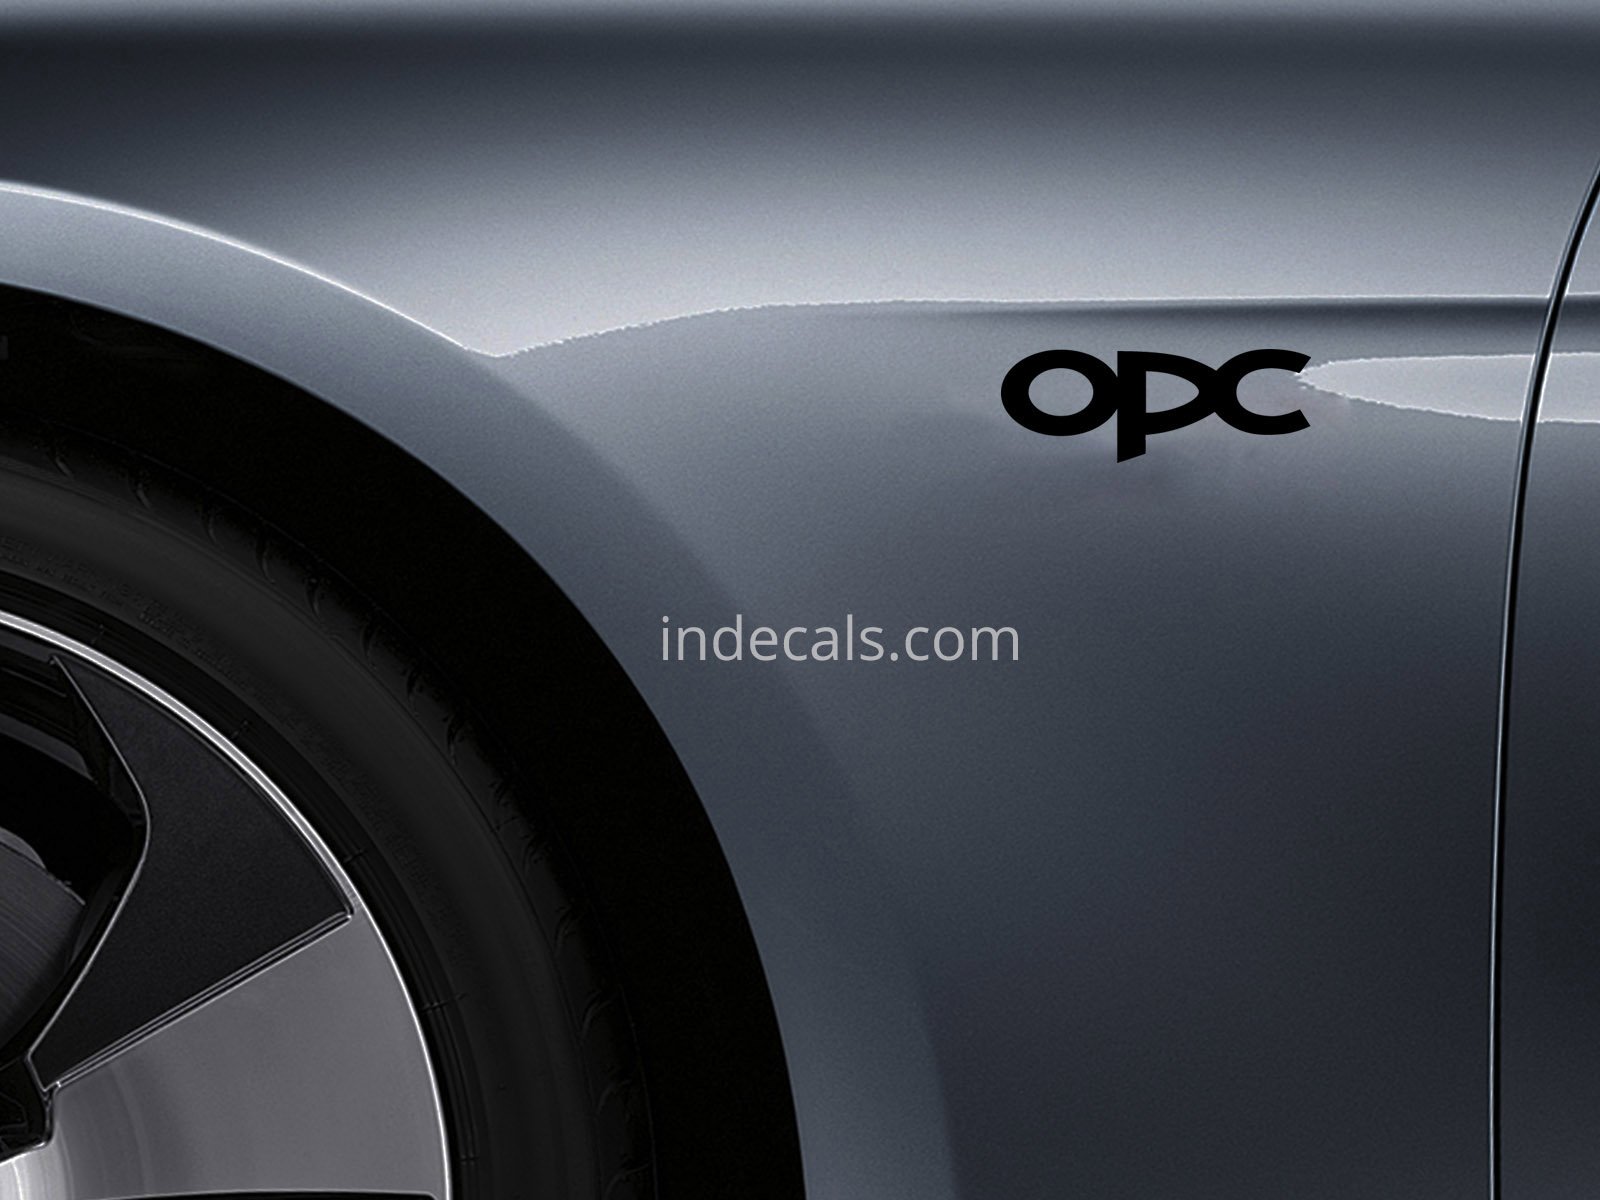 3 x Opel OPC Stickers for Wings - Black